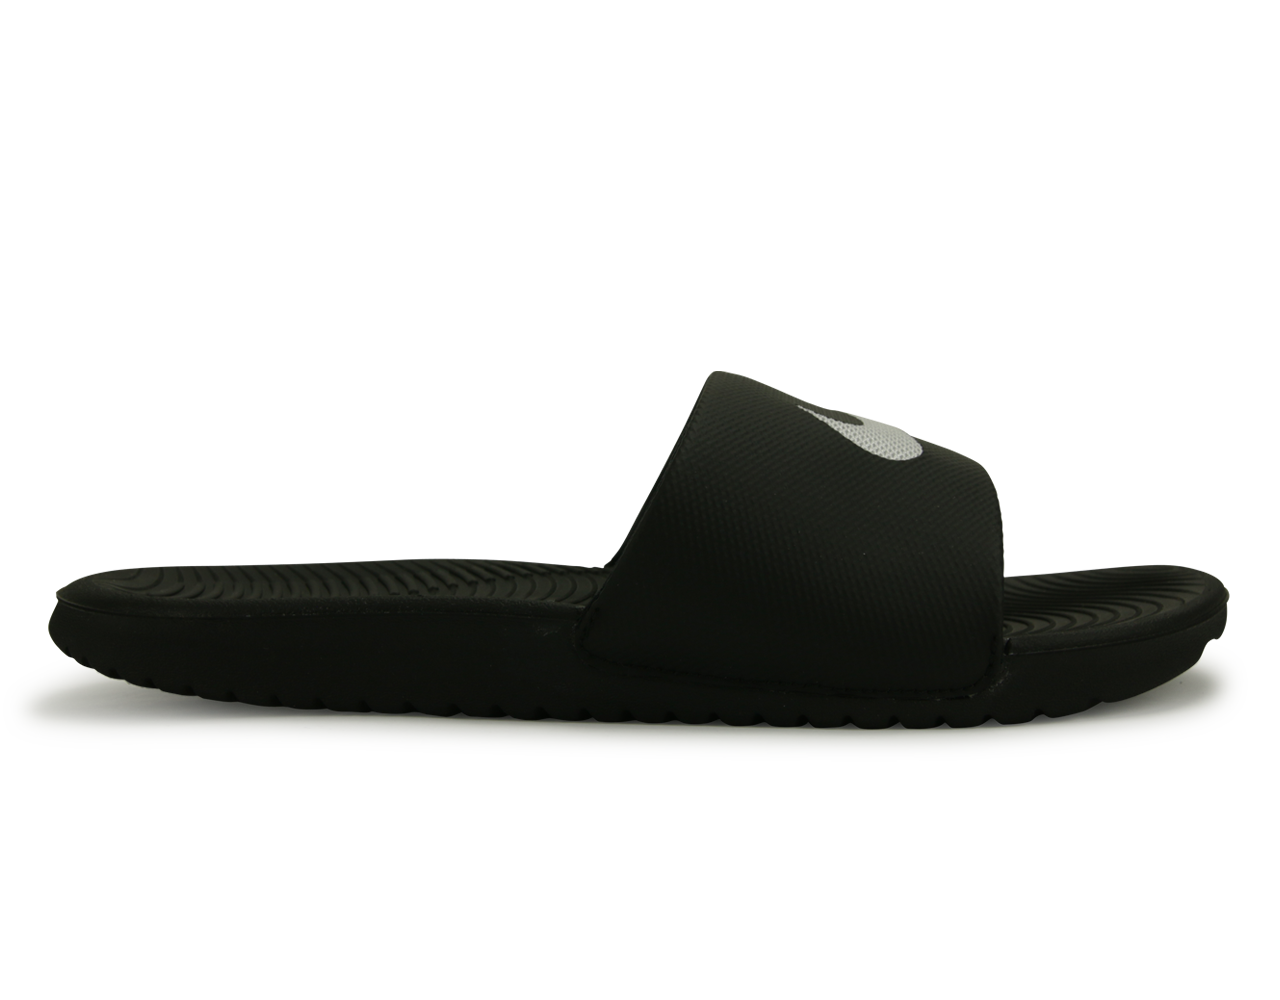 Nike Men's Kawa Slide Sandal Black/White